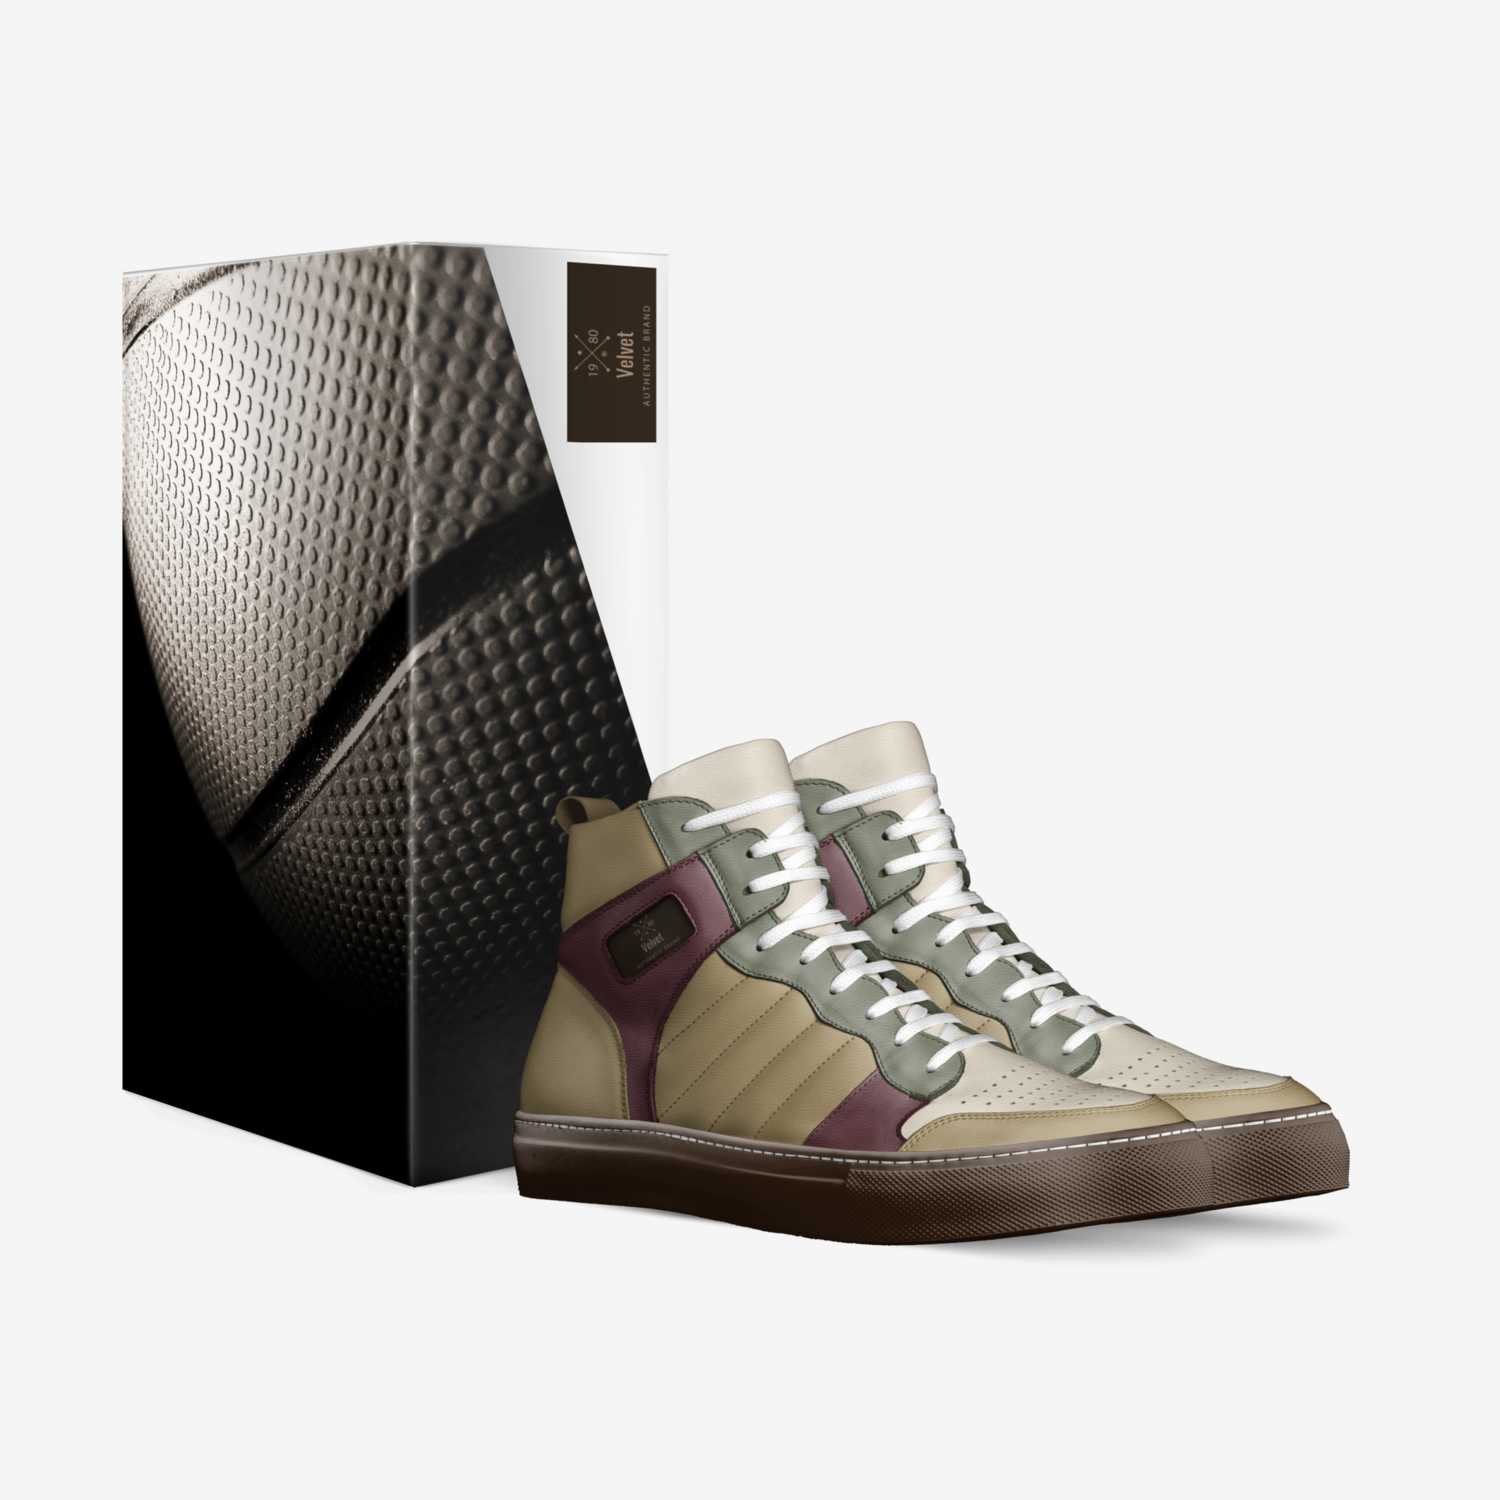 Velvet custom made in Italy shoes by Shantae Esannason | Box view